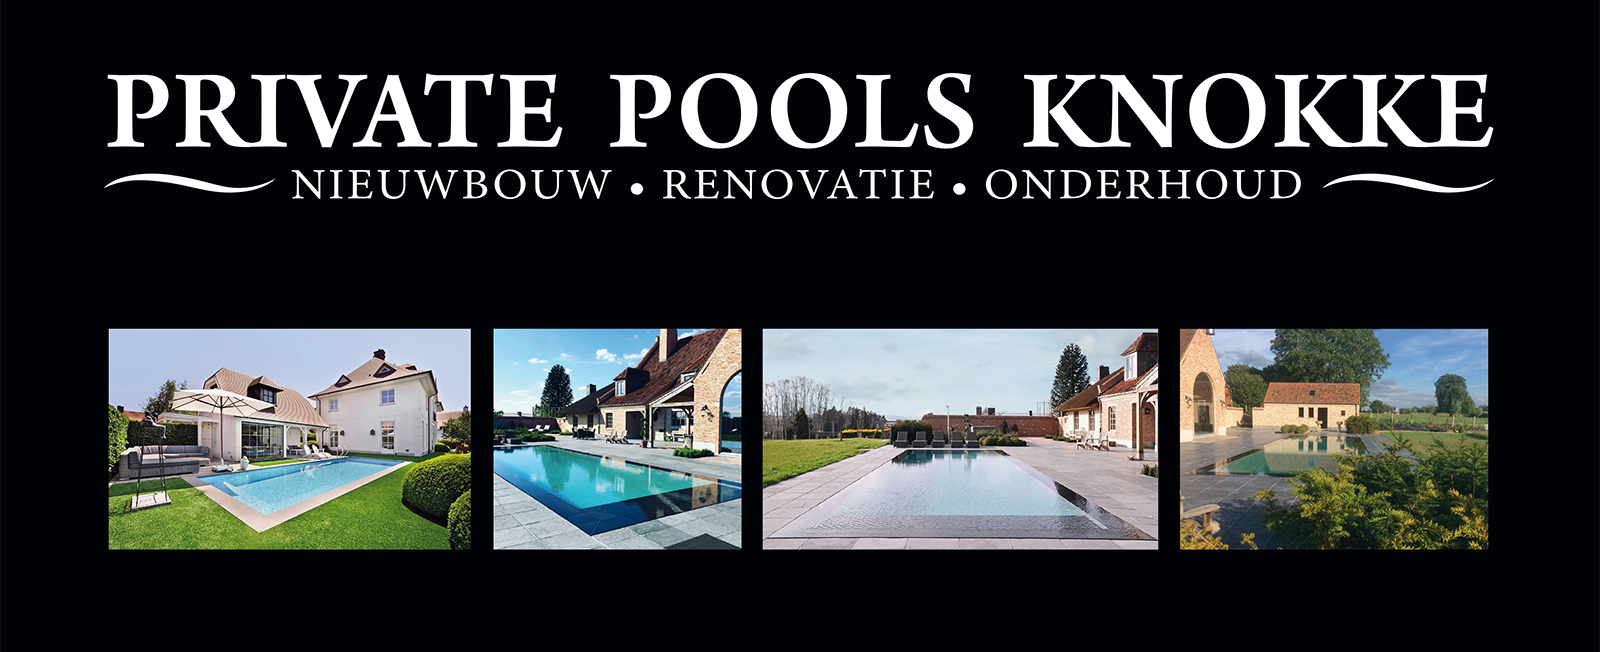 Private Pools Knokke